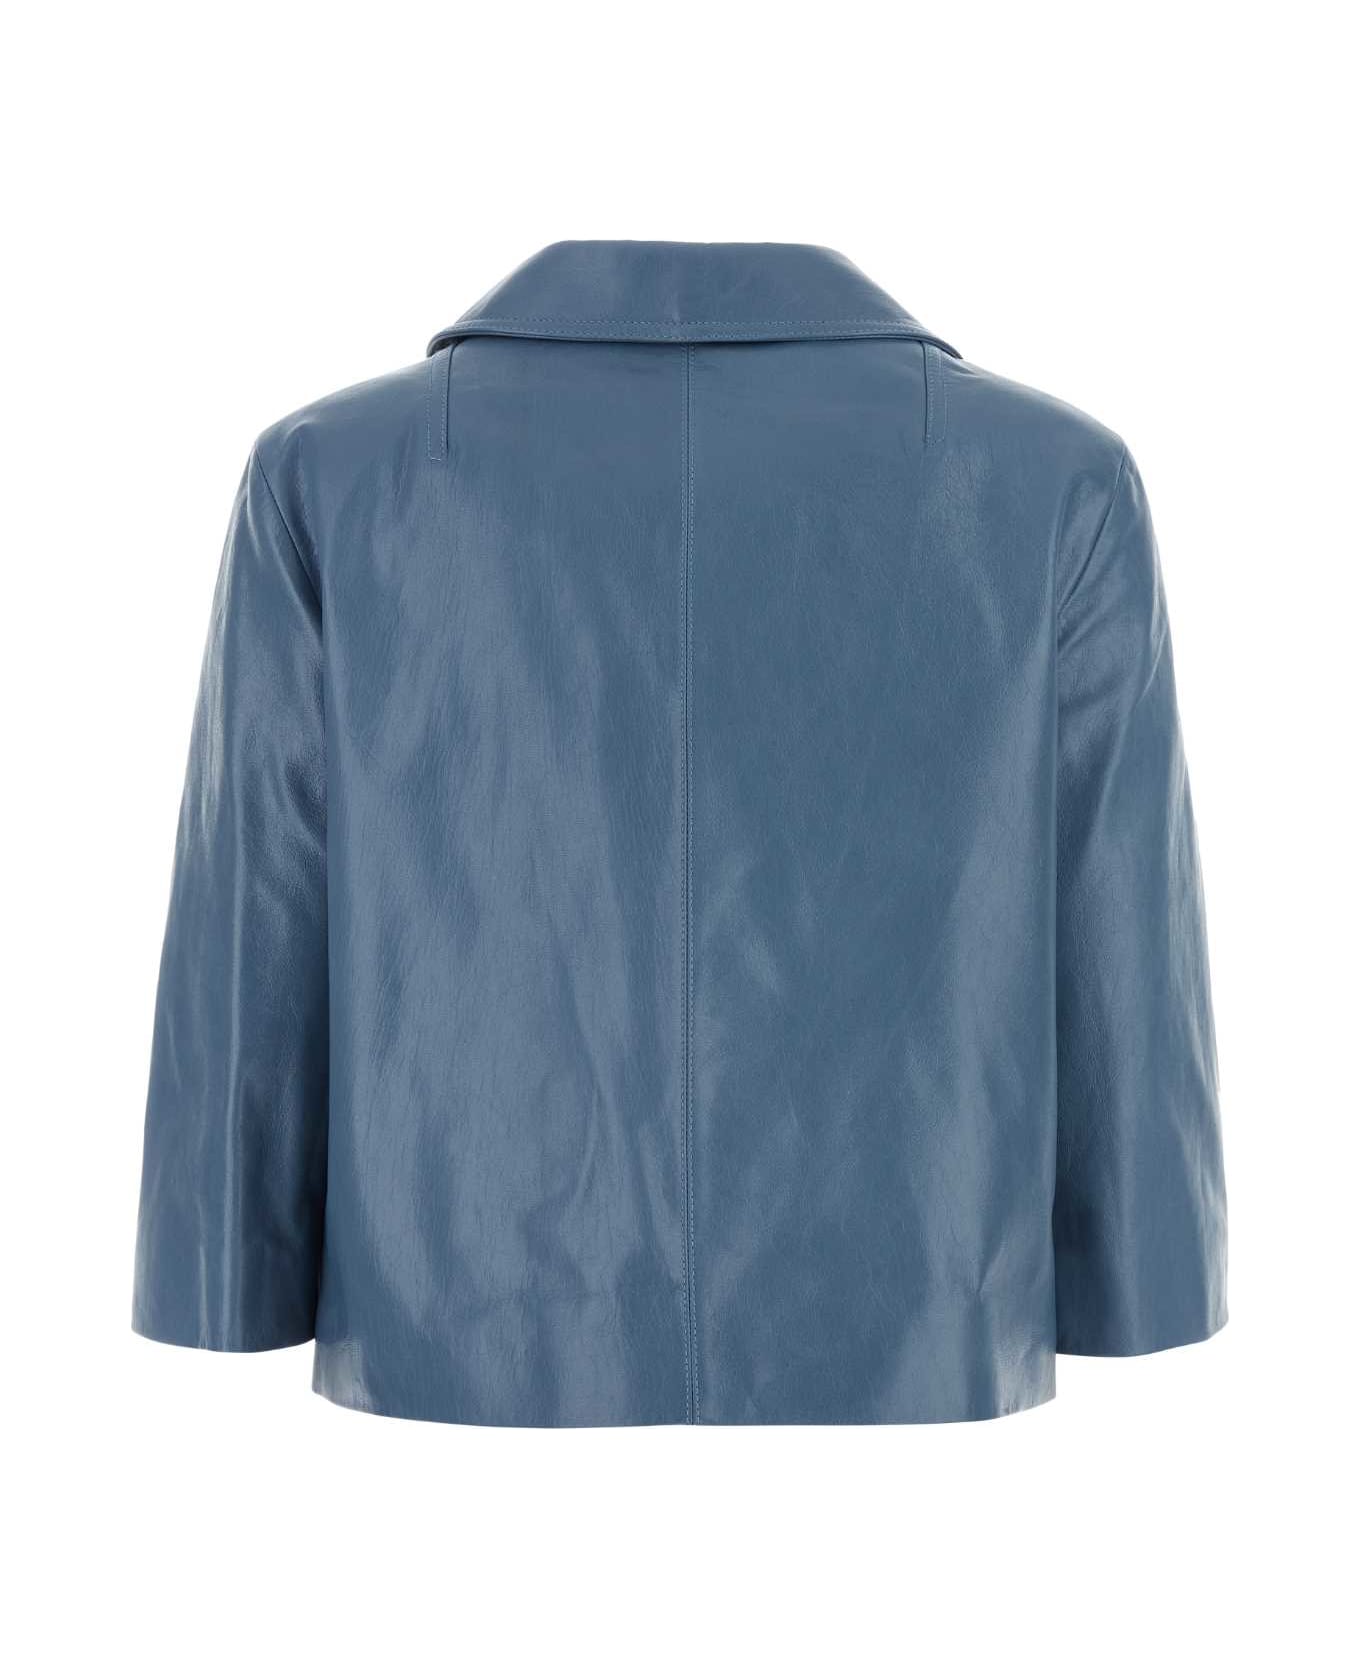 Marni Cerulean Blue Leather Blazer - 00B37 レザージャケット